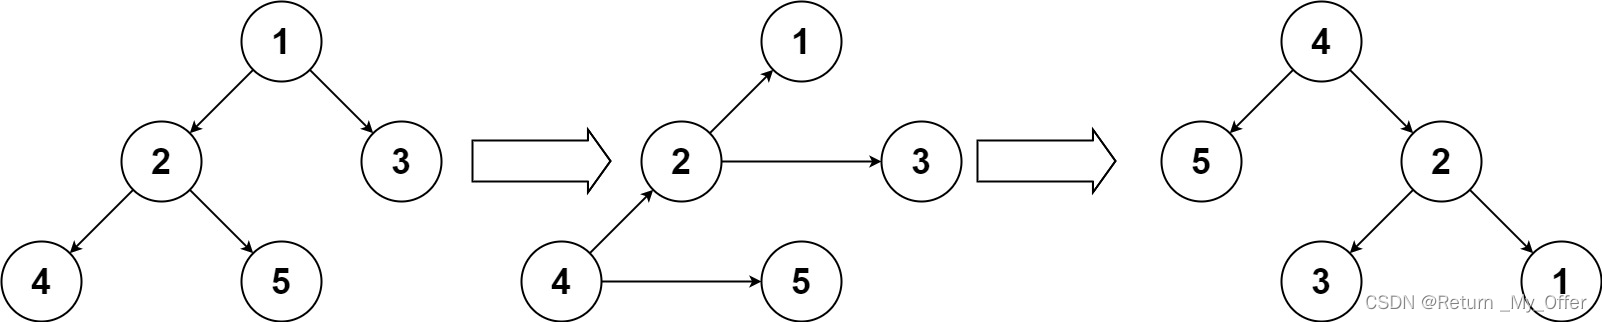 【LeetCode刷题（数据结构与算法）】：上下翻转二叉树